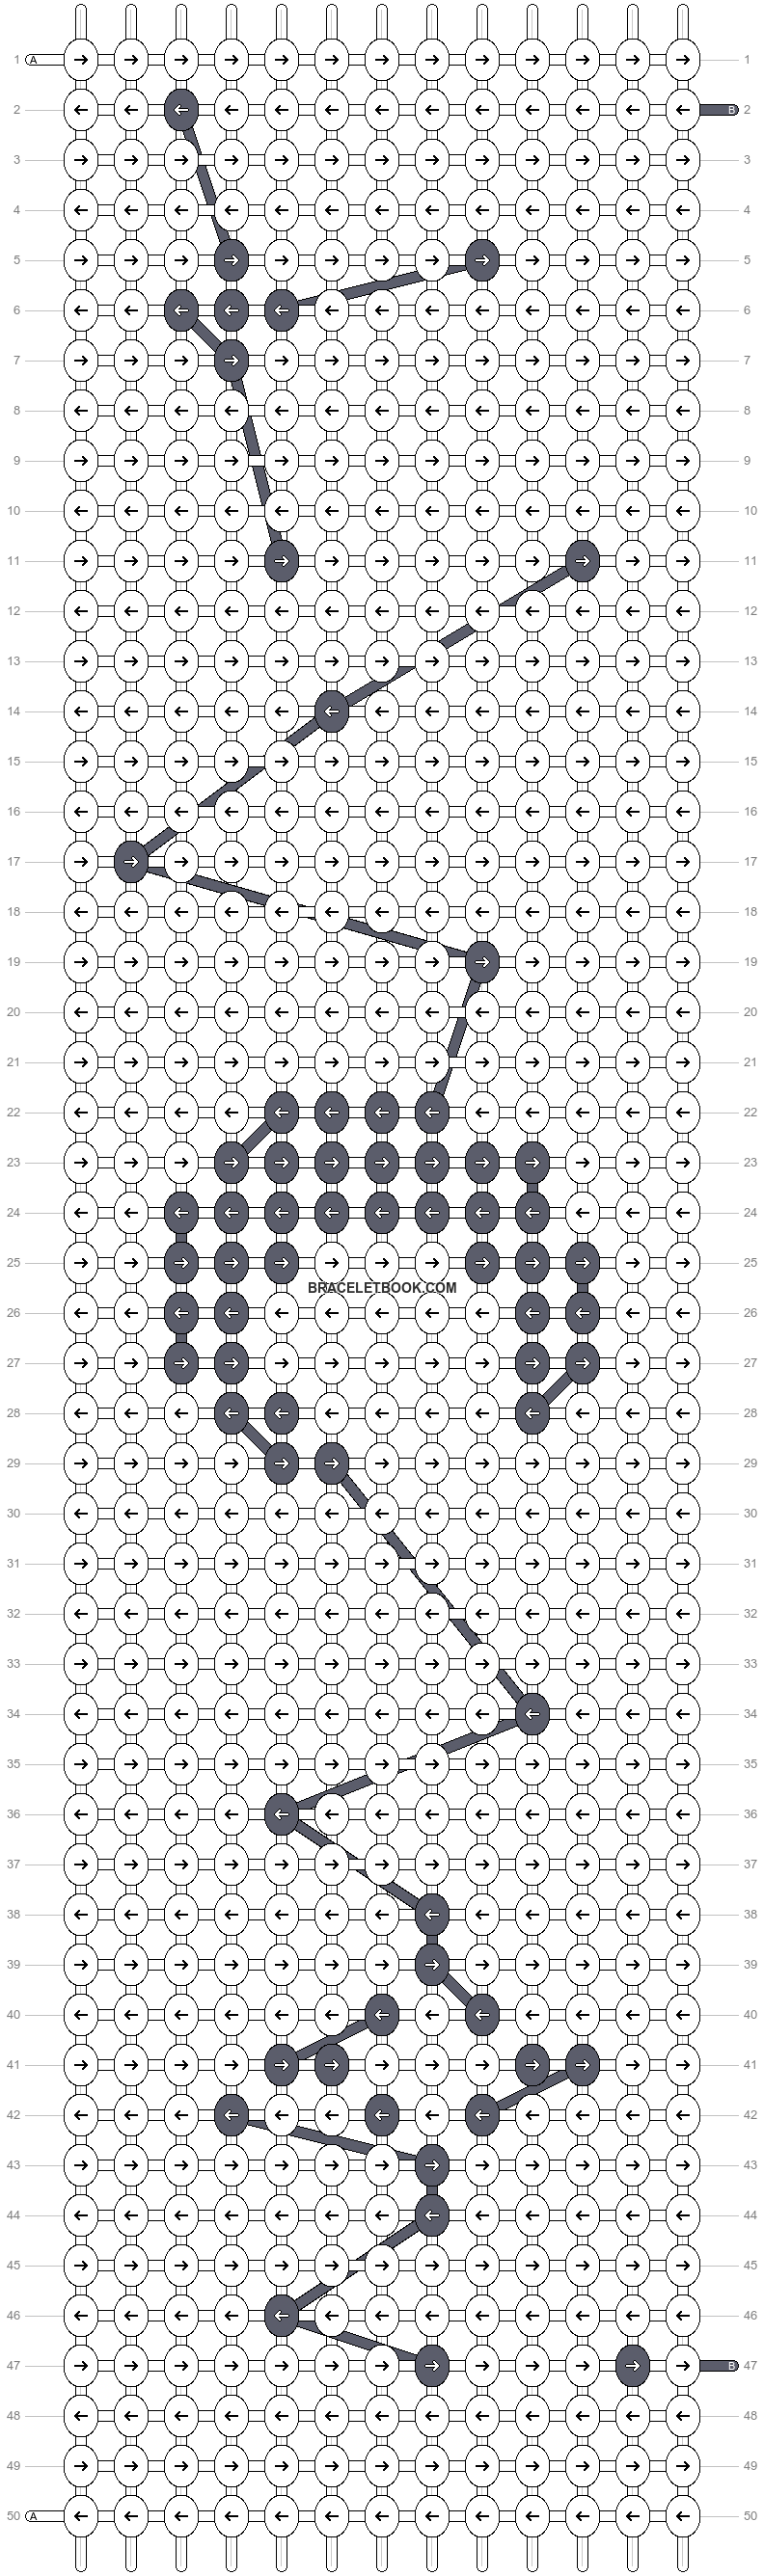 Alpha pattern #57316 variation #129281 pattern